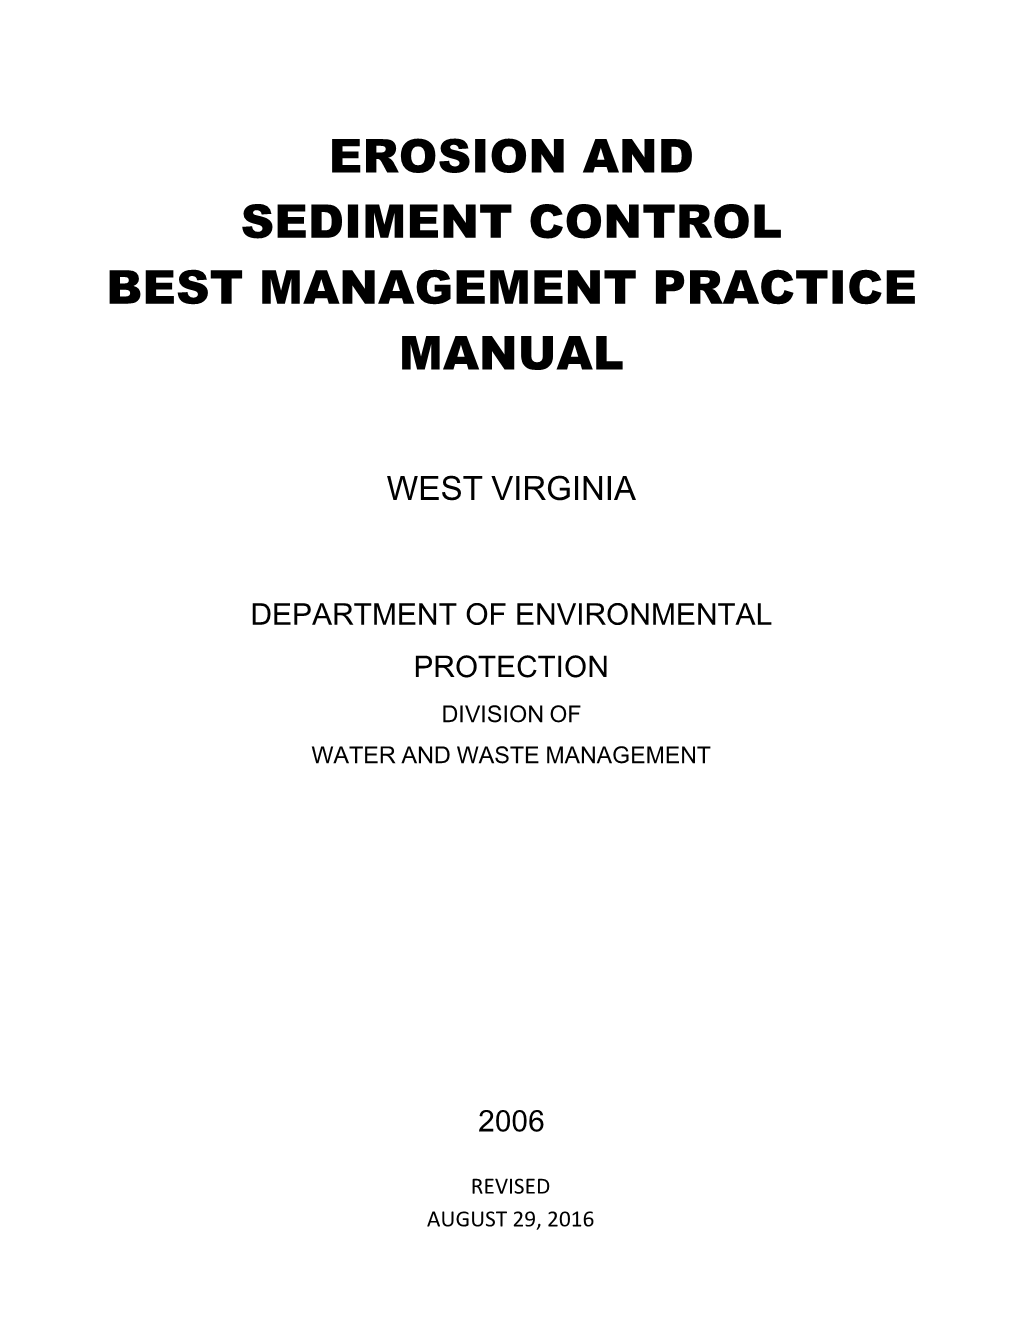 Erosion and Sediment Control Best Management Practices